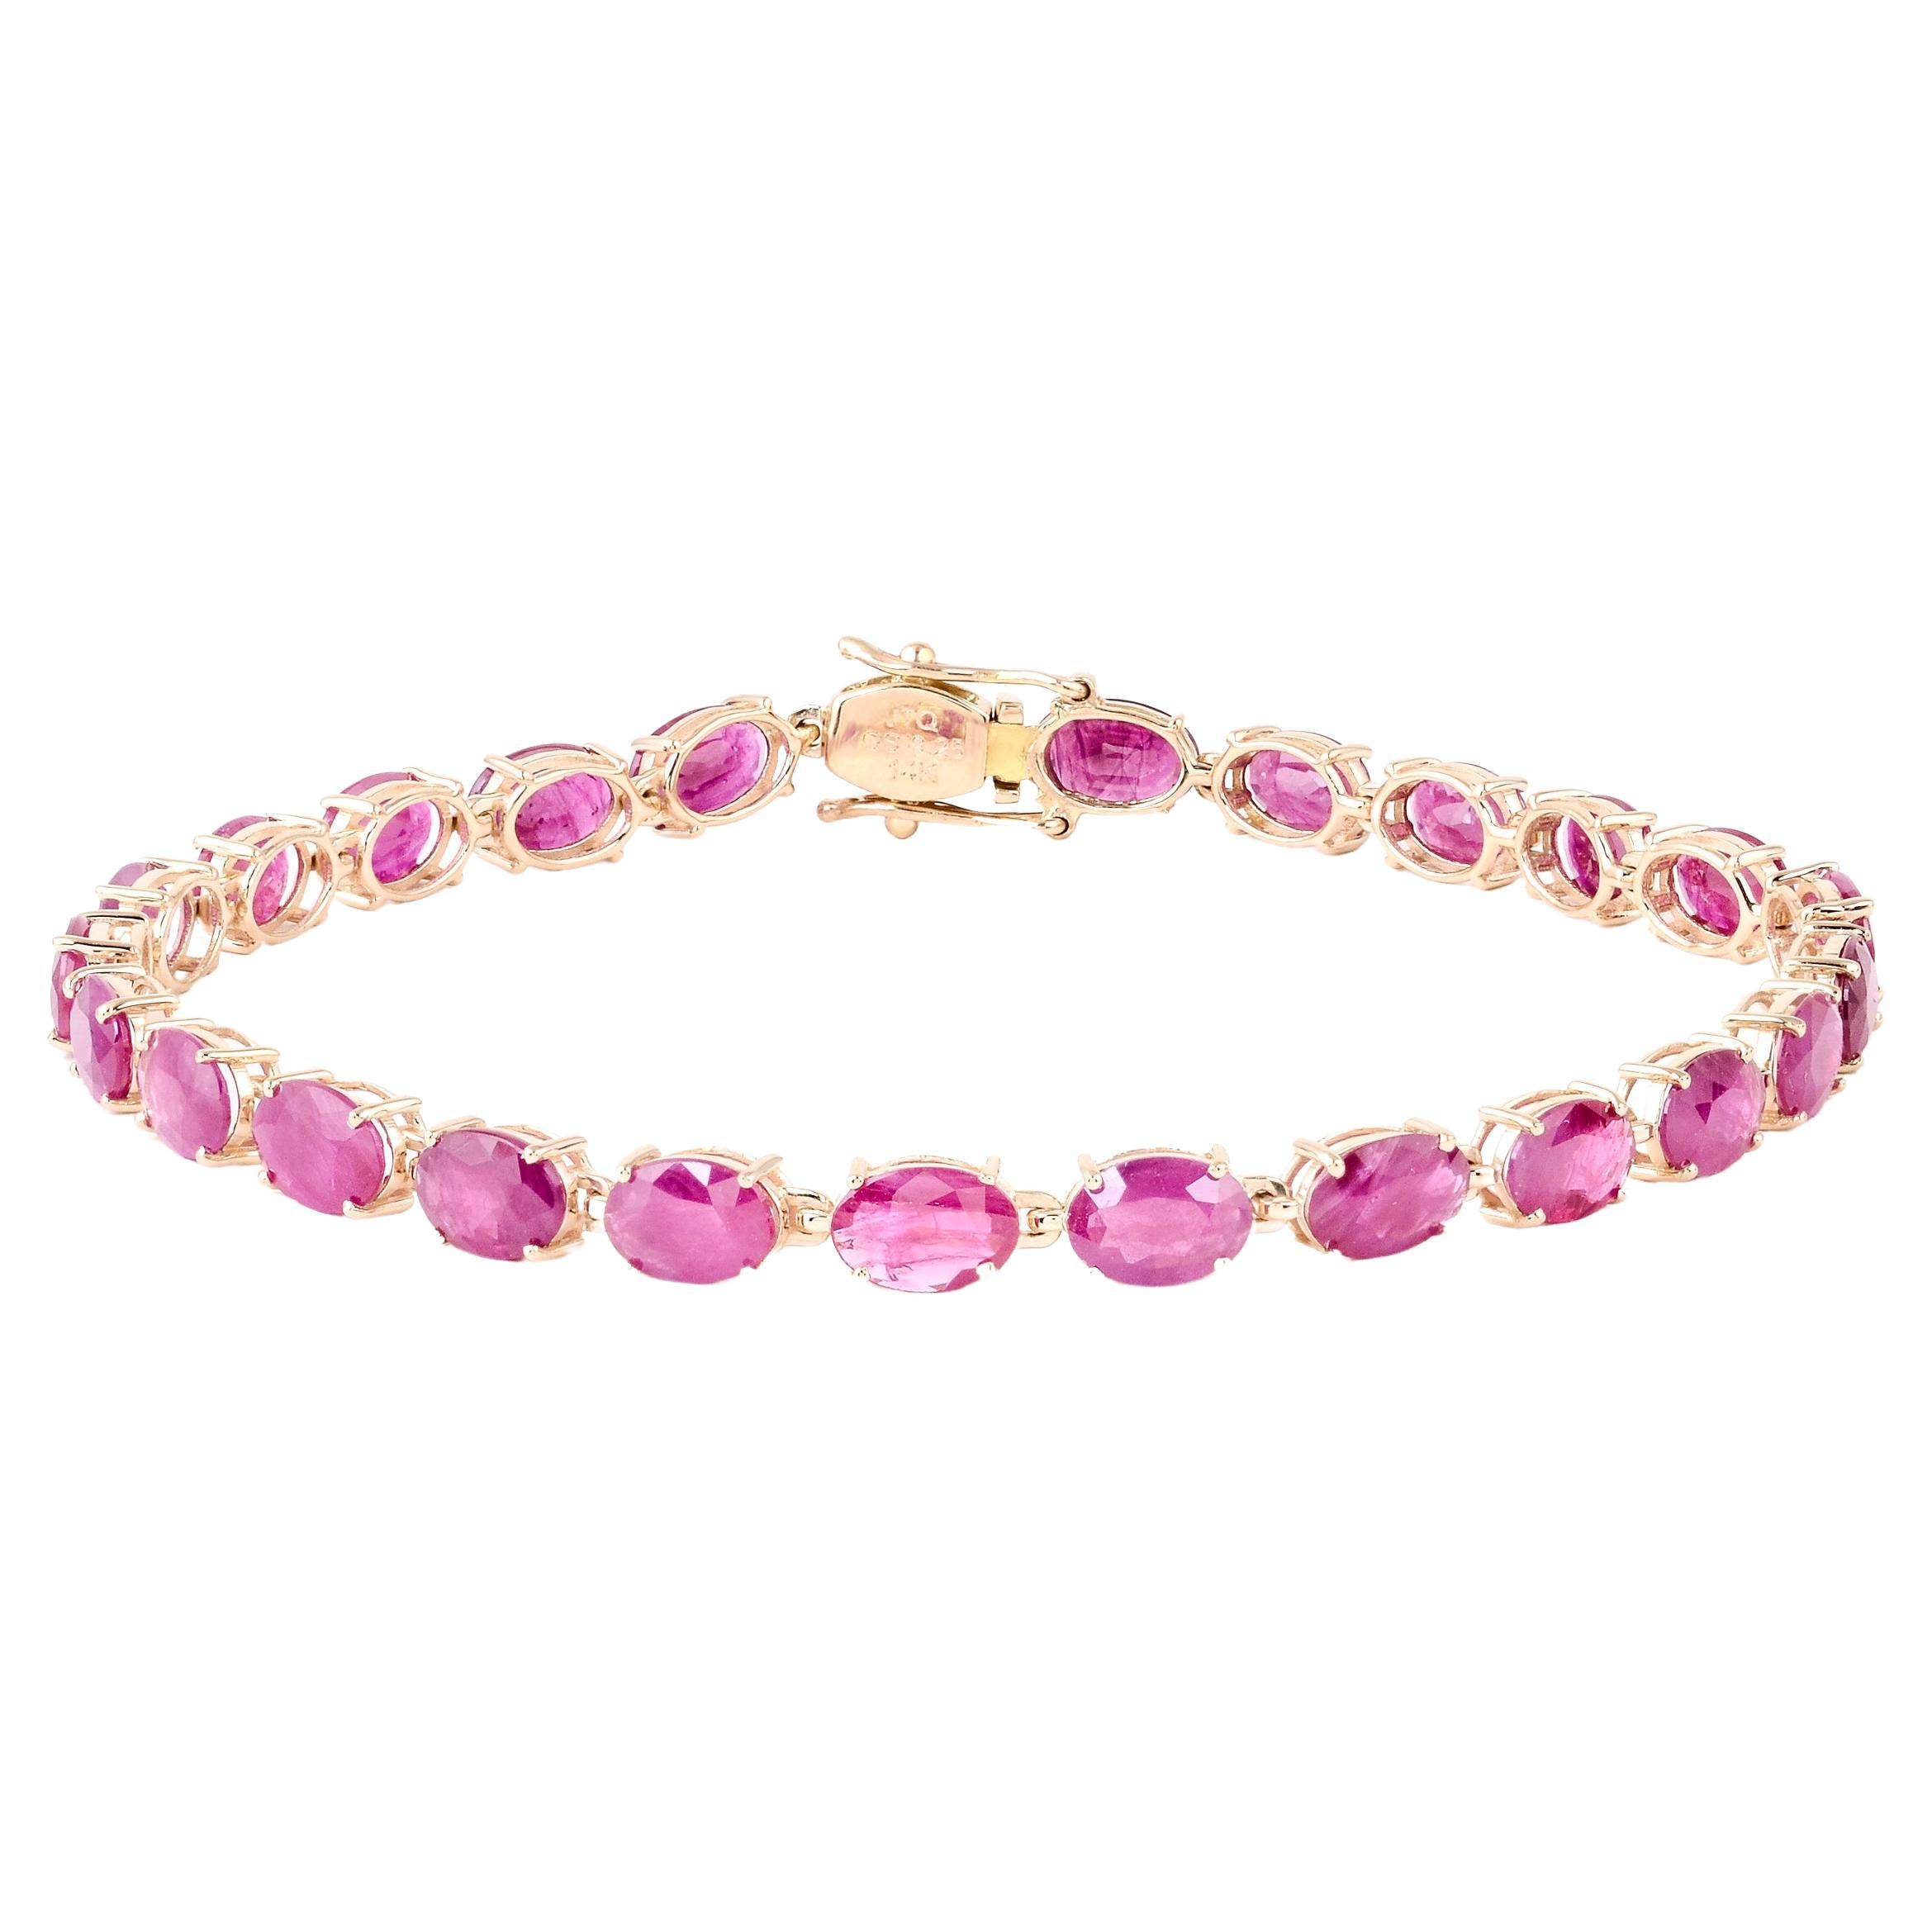 14K 8.40ctw Ruby Link Bracelet - Exquisite Gemstone Elegance, Timeless Luxury